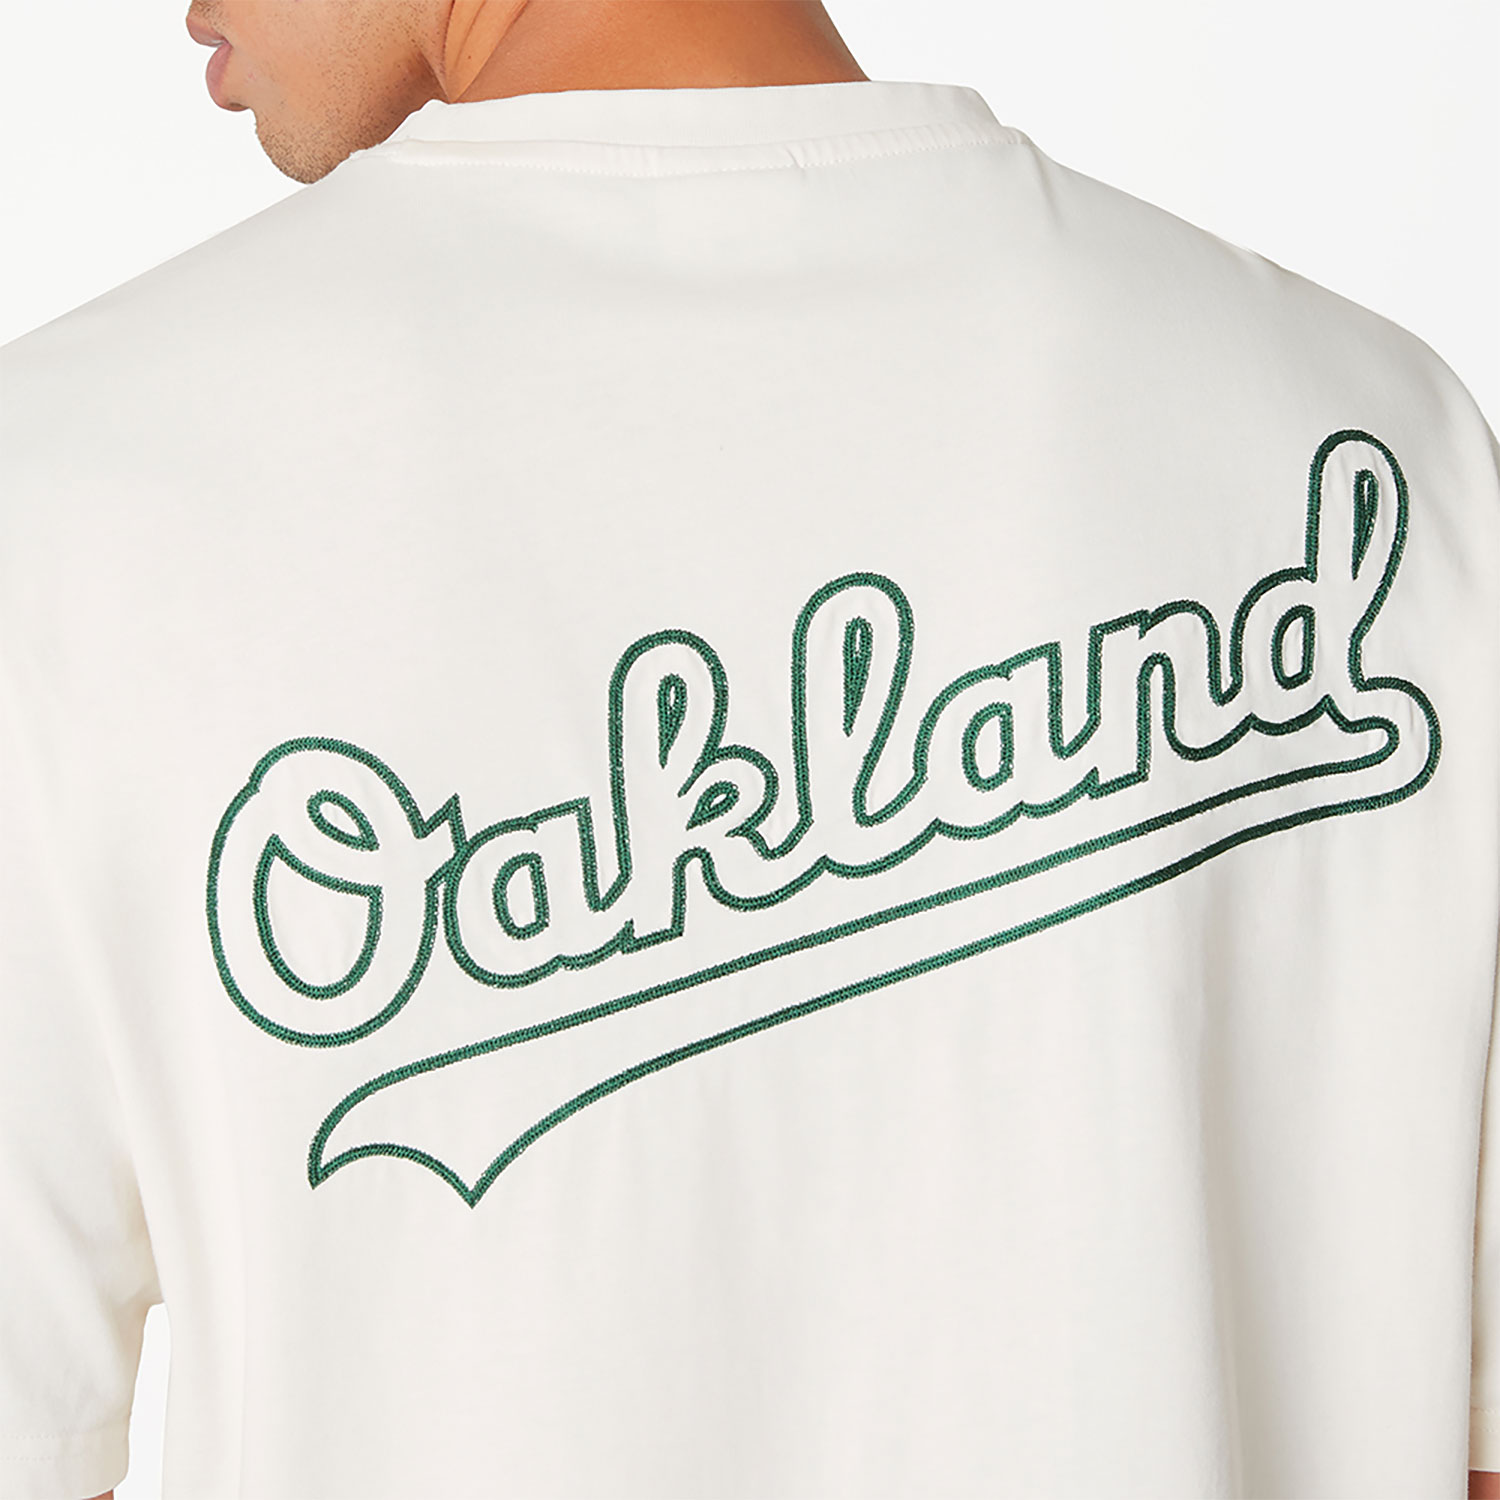 Team Athletica, Shirts & Tops, Oakland As Long Sleeve Youth Long Sleeve  Tshirt